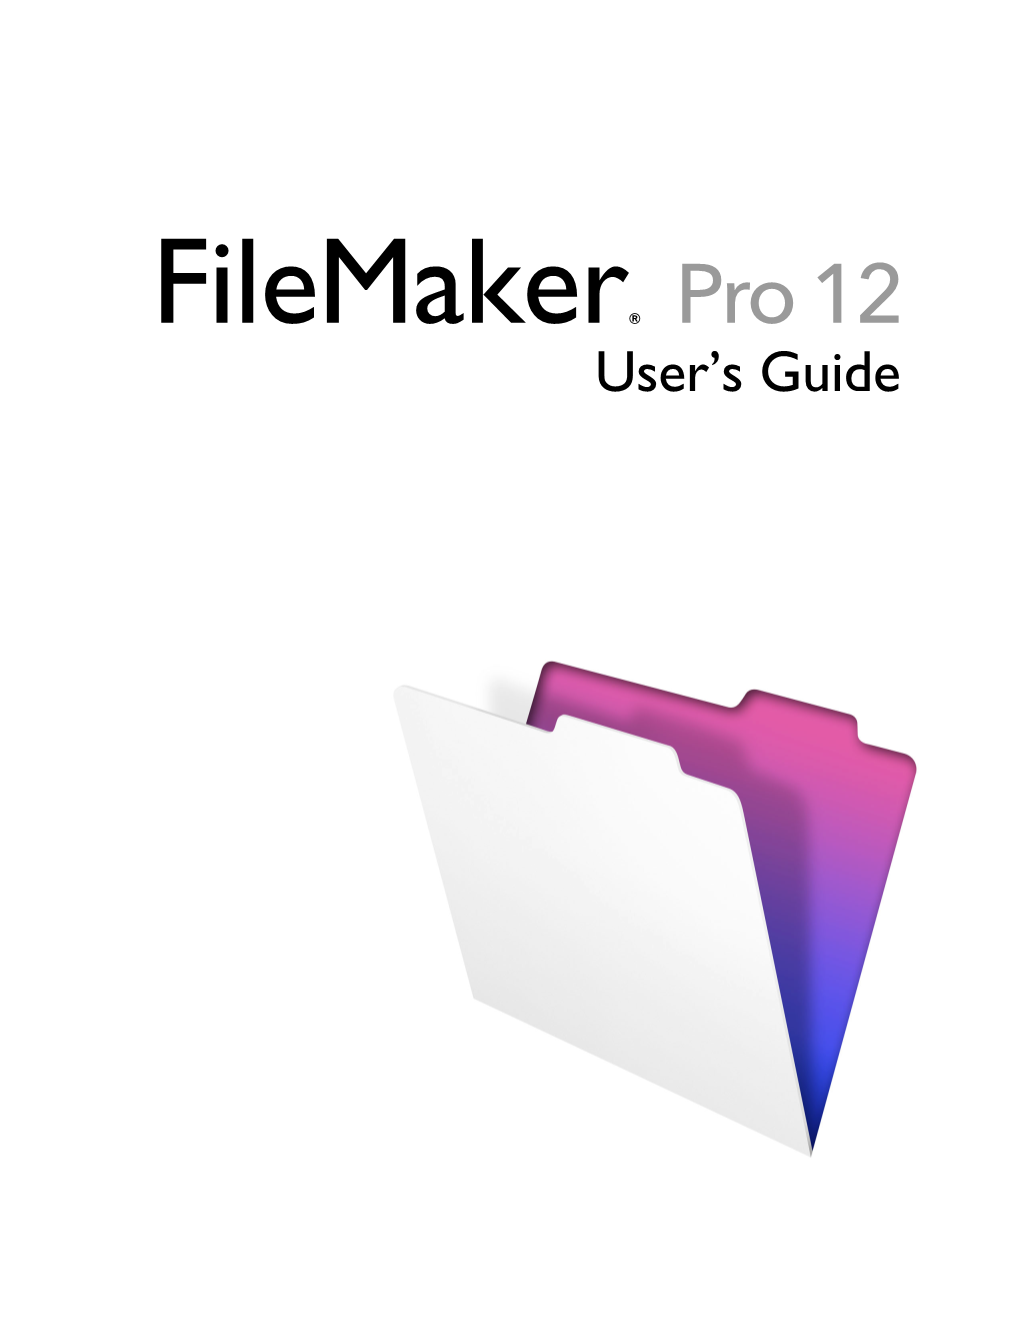 Filemaker Pro 12 User's Guide